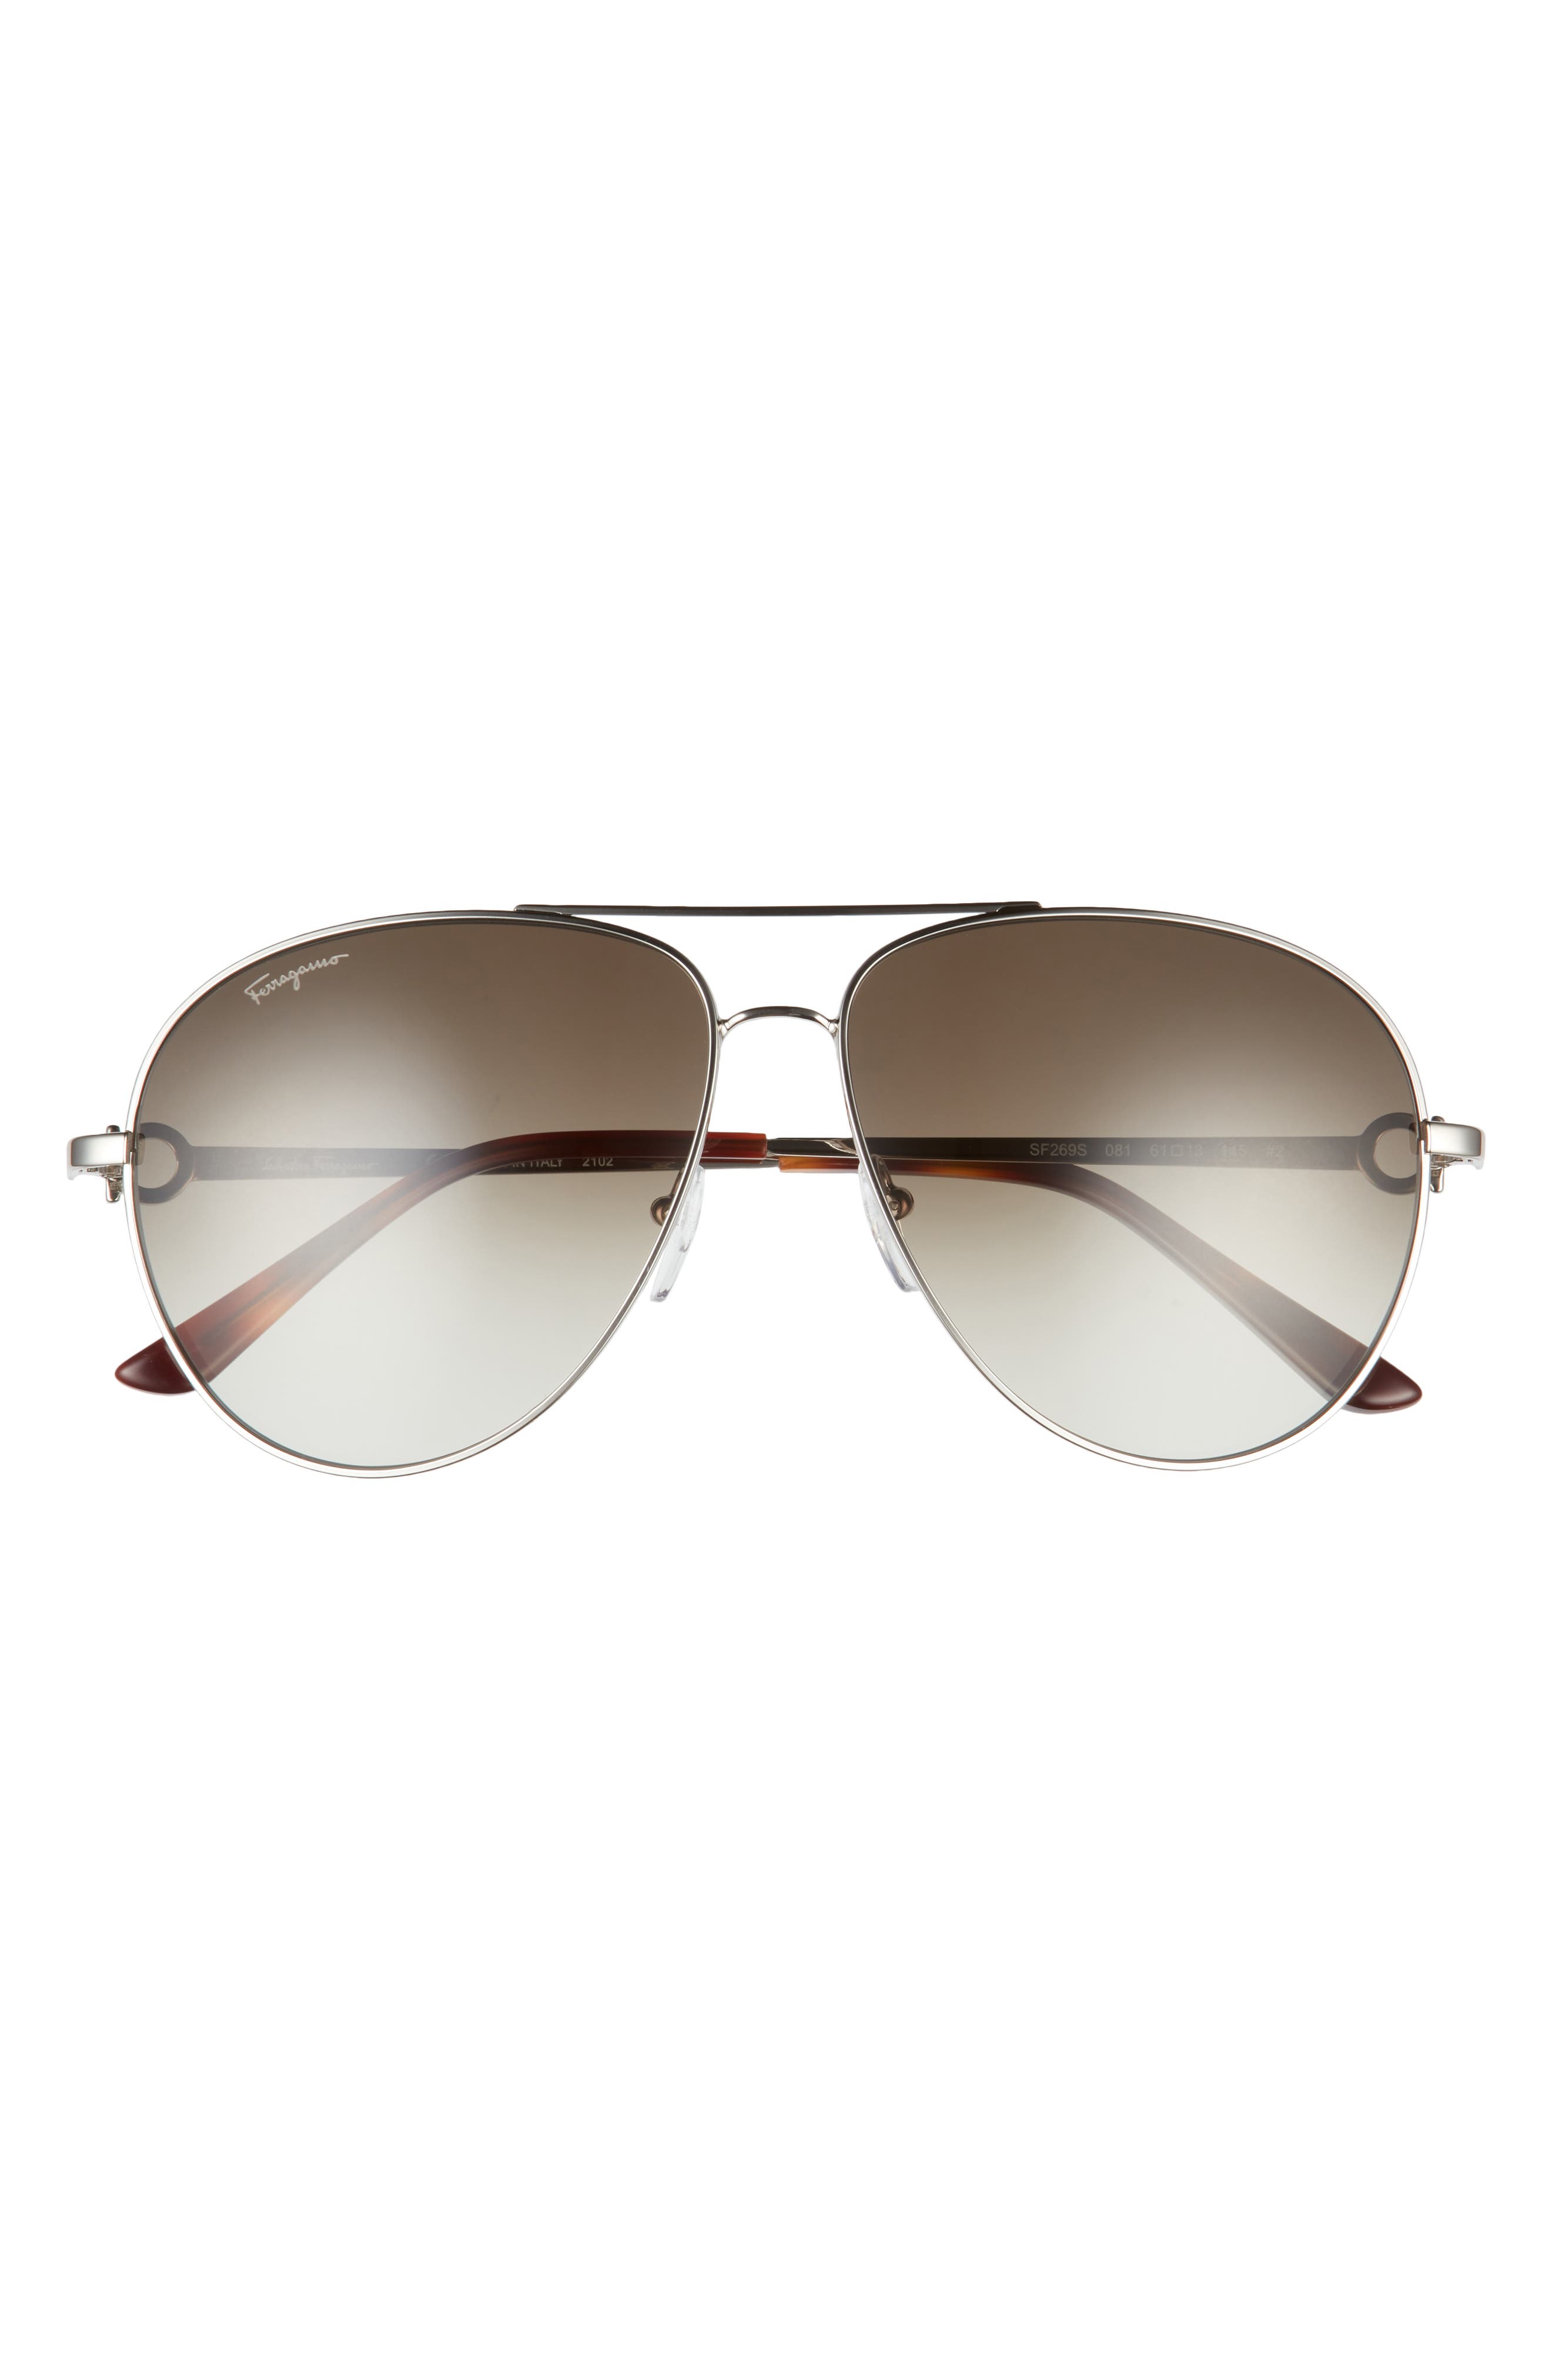 Salvatore Ferragamo 61mm Timeless Aviator Sunglasses in Light Ruthenium/Grey at Nordstrom